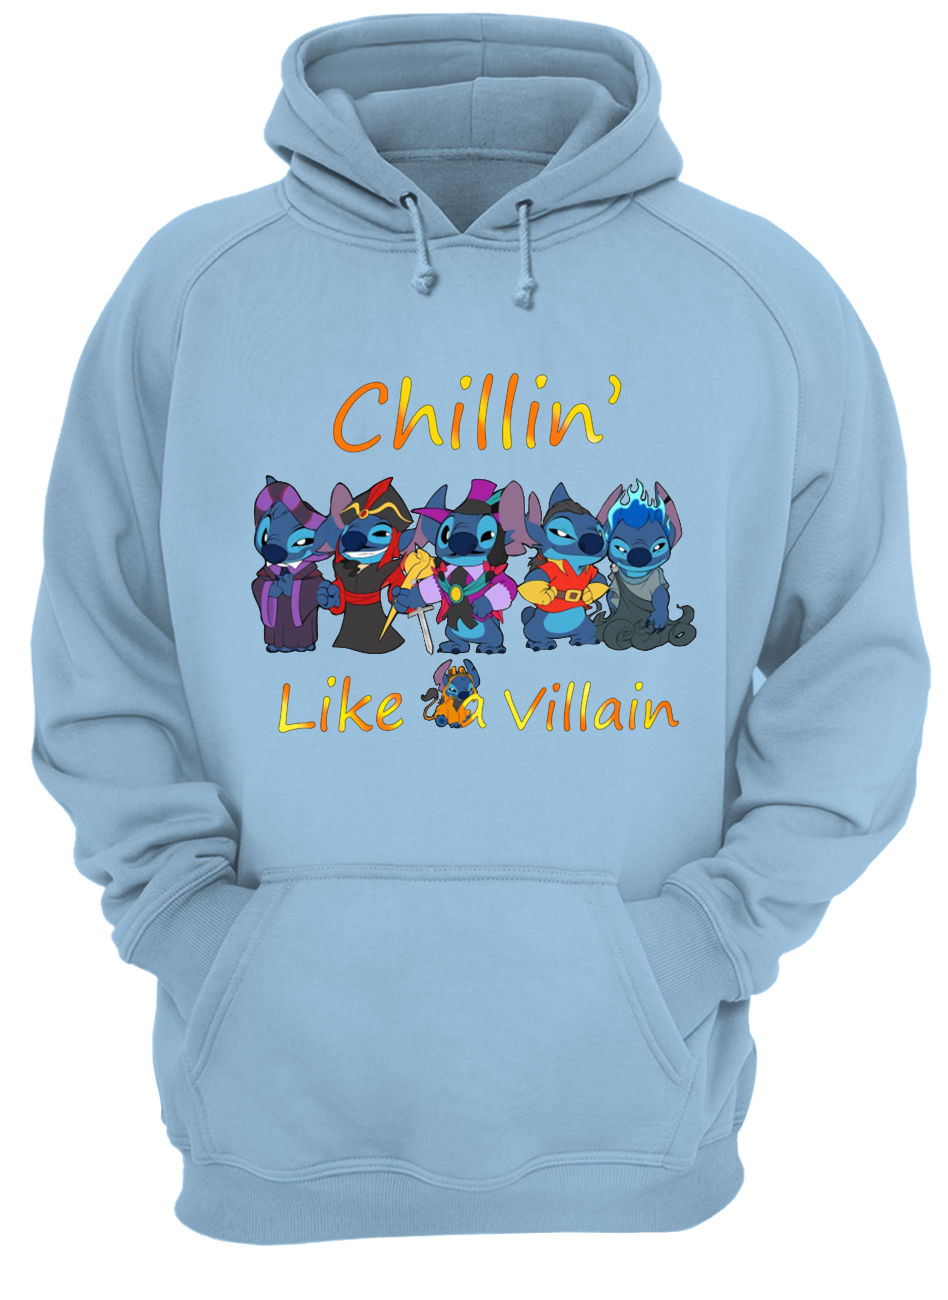 Stitch chillin like a villain hoodie